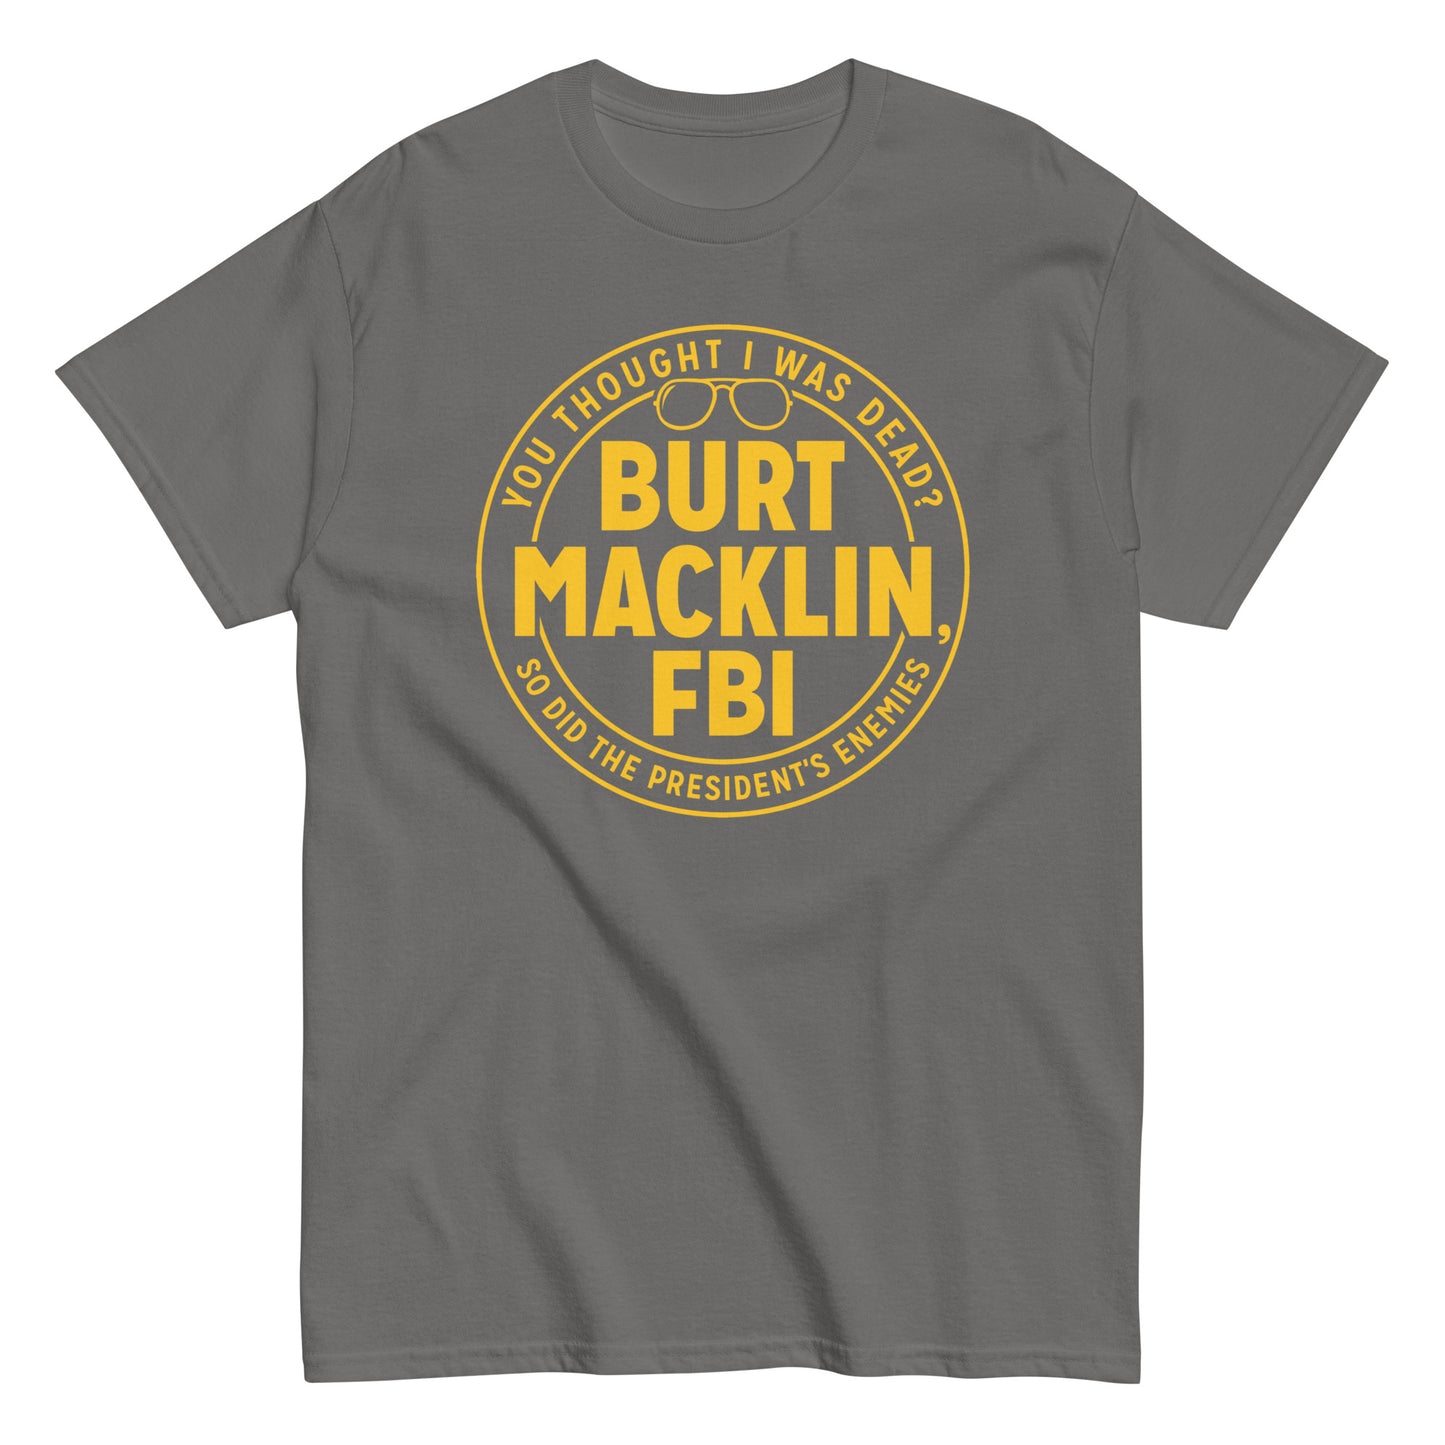 Burt Macklin, FBI Men's Classic Tee